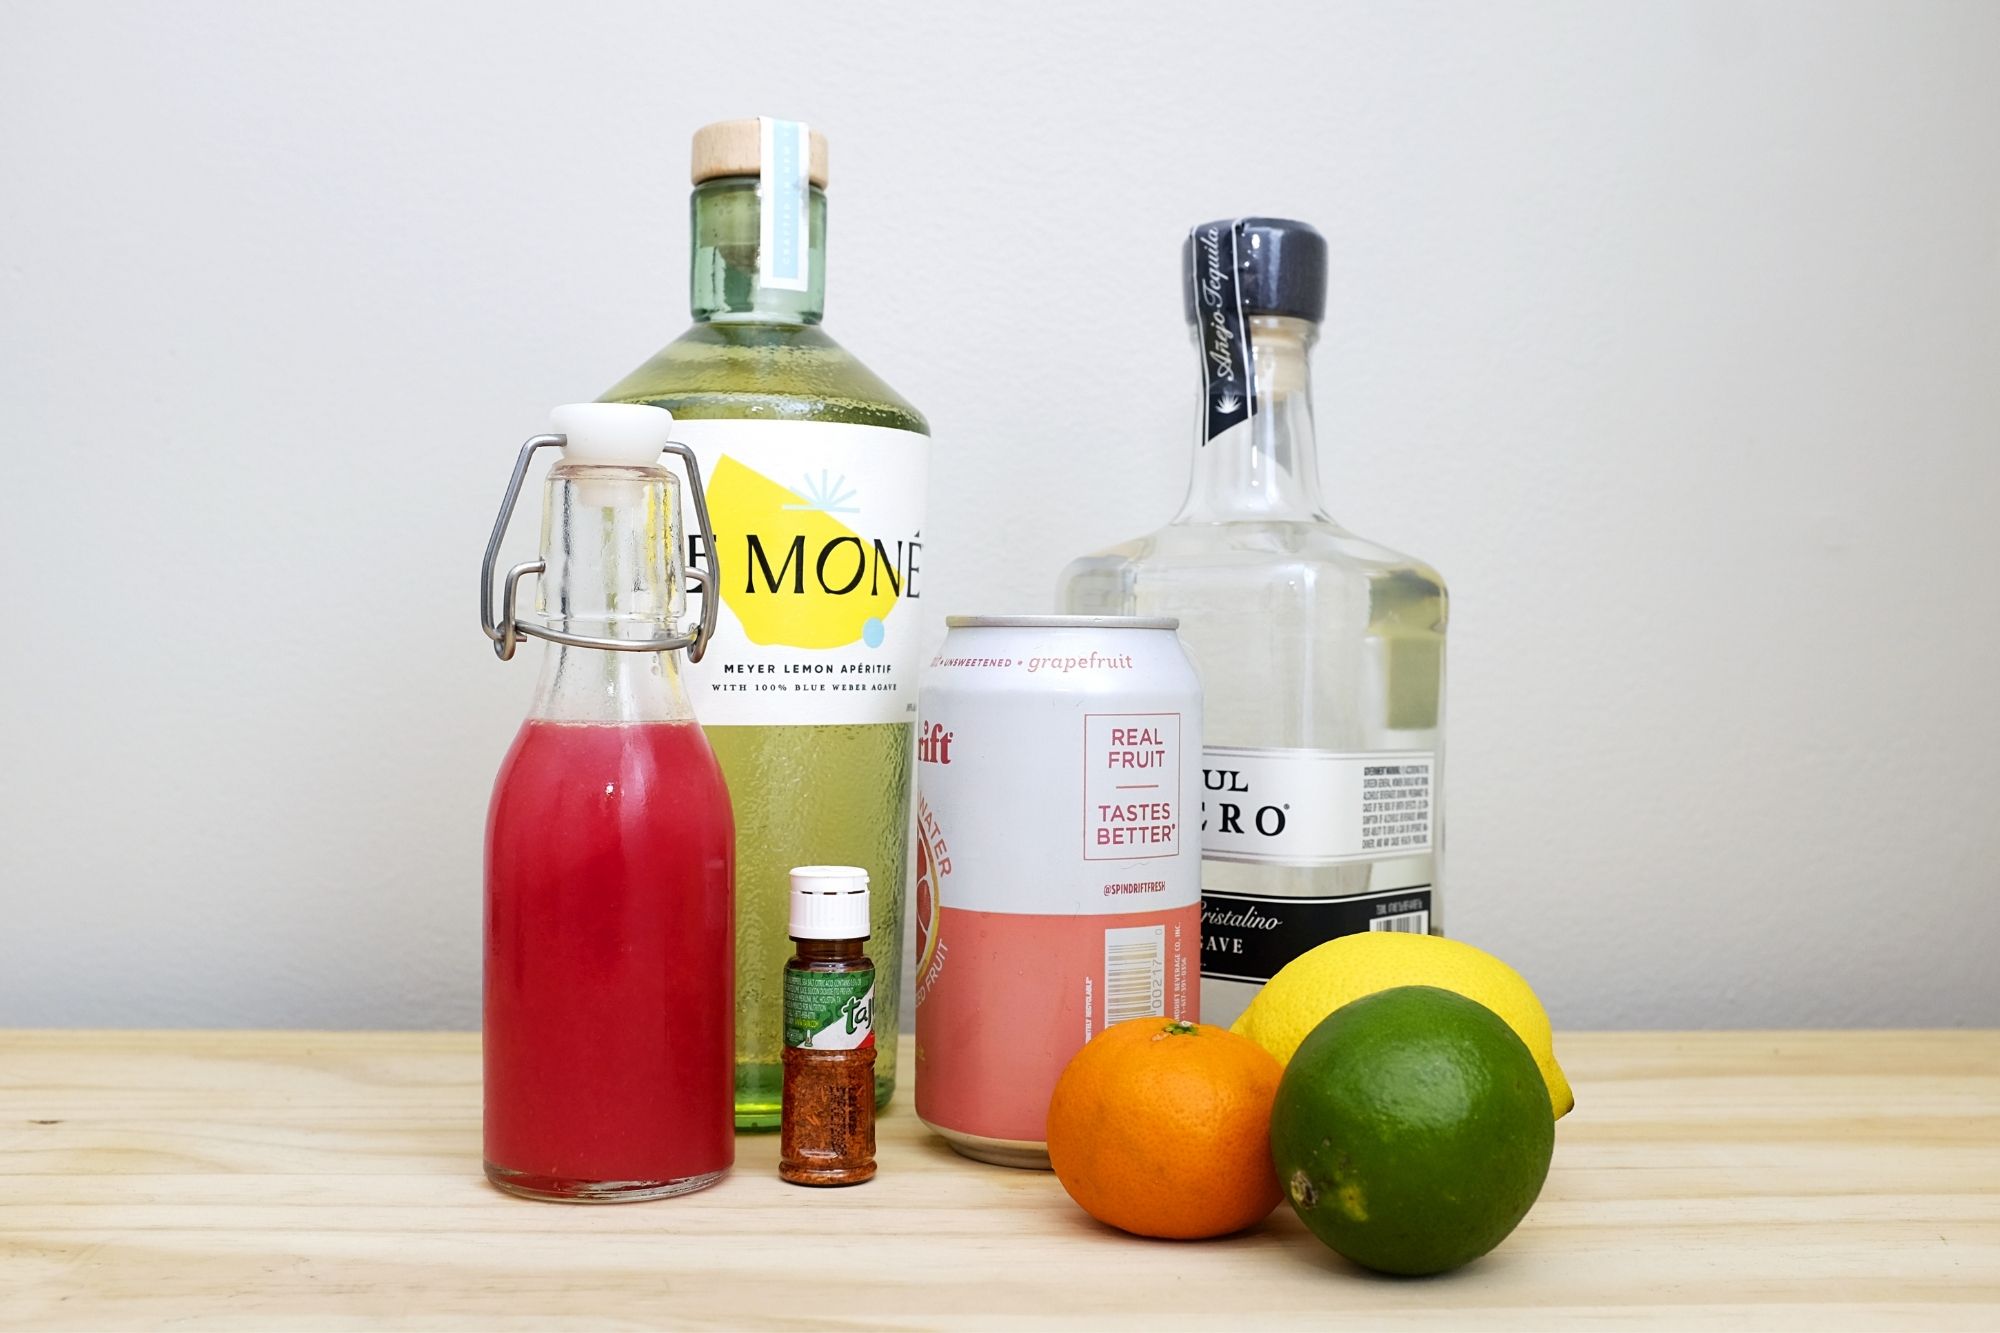 Ingredients for the recipe: Le Mone, tequila, juice, grapefruit soda, Tajin, and citrus